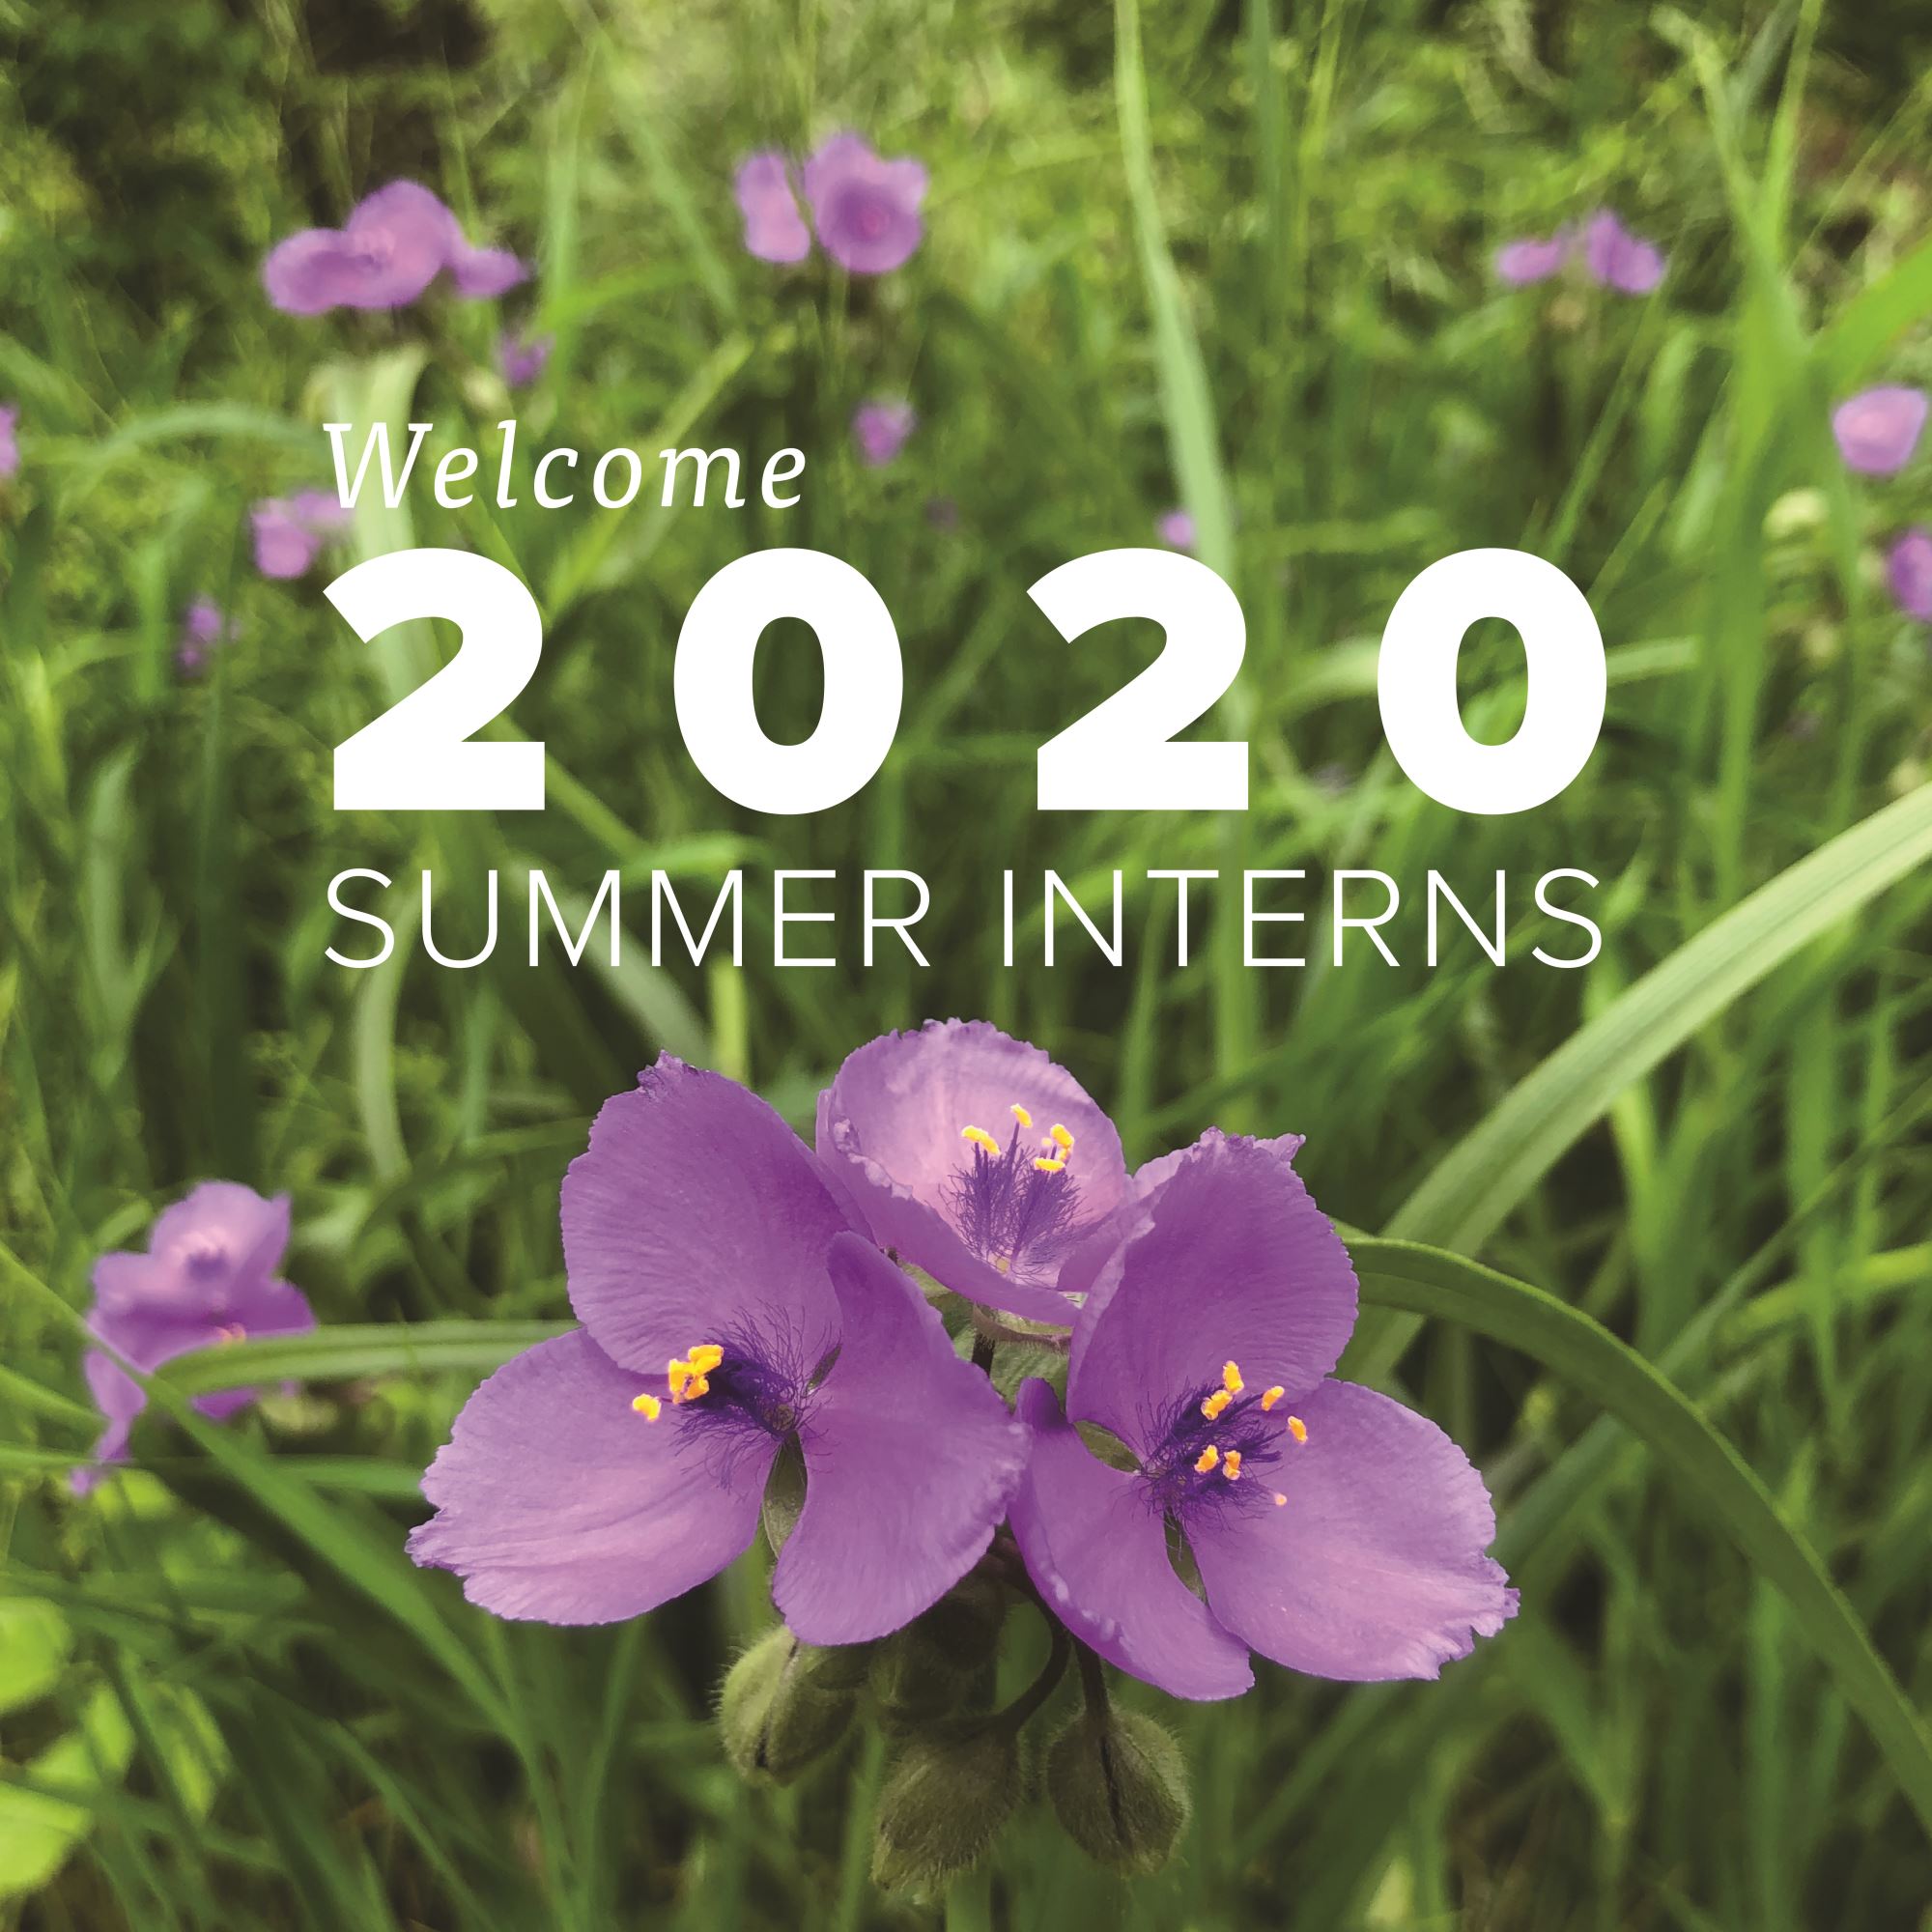 Meet INHF's 2020 Summer Interns